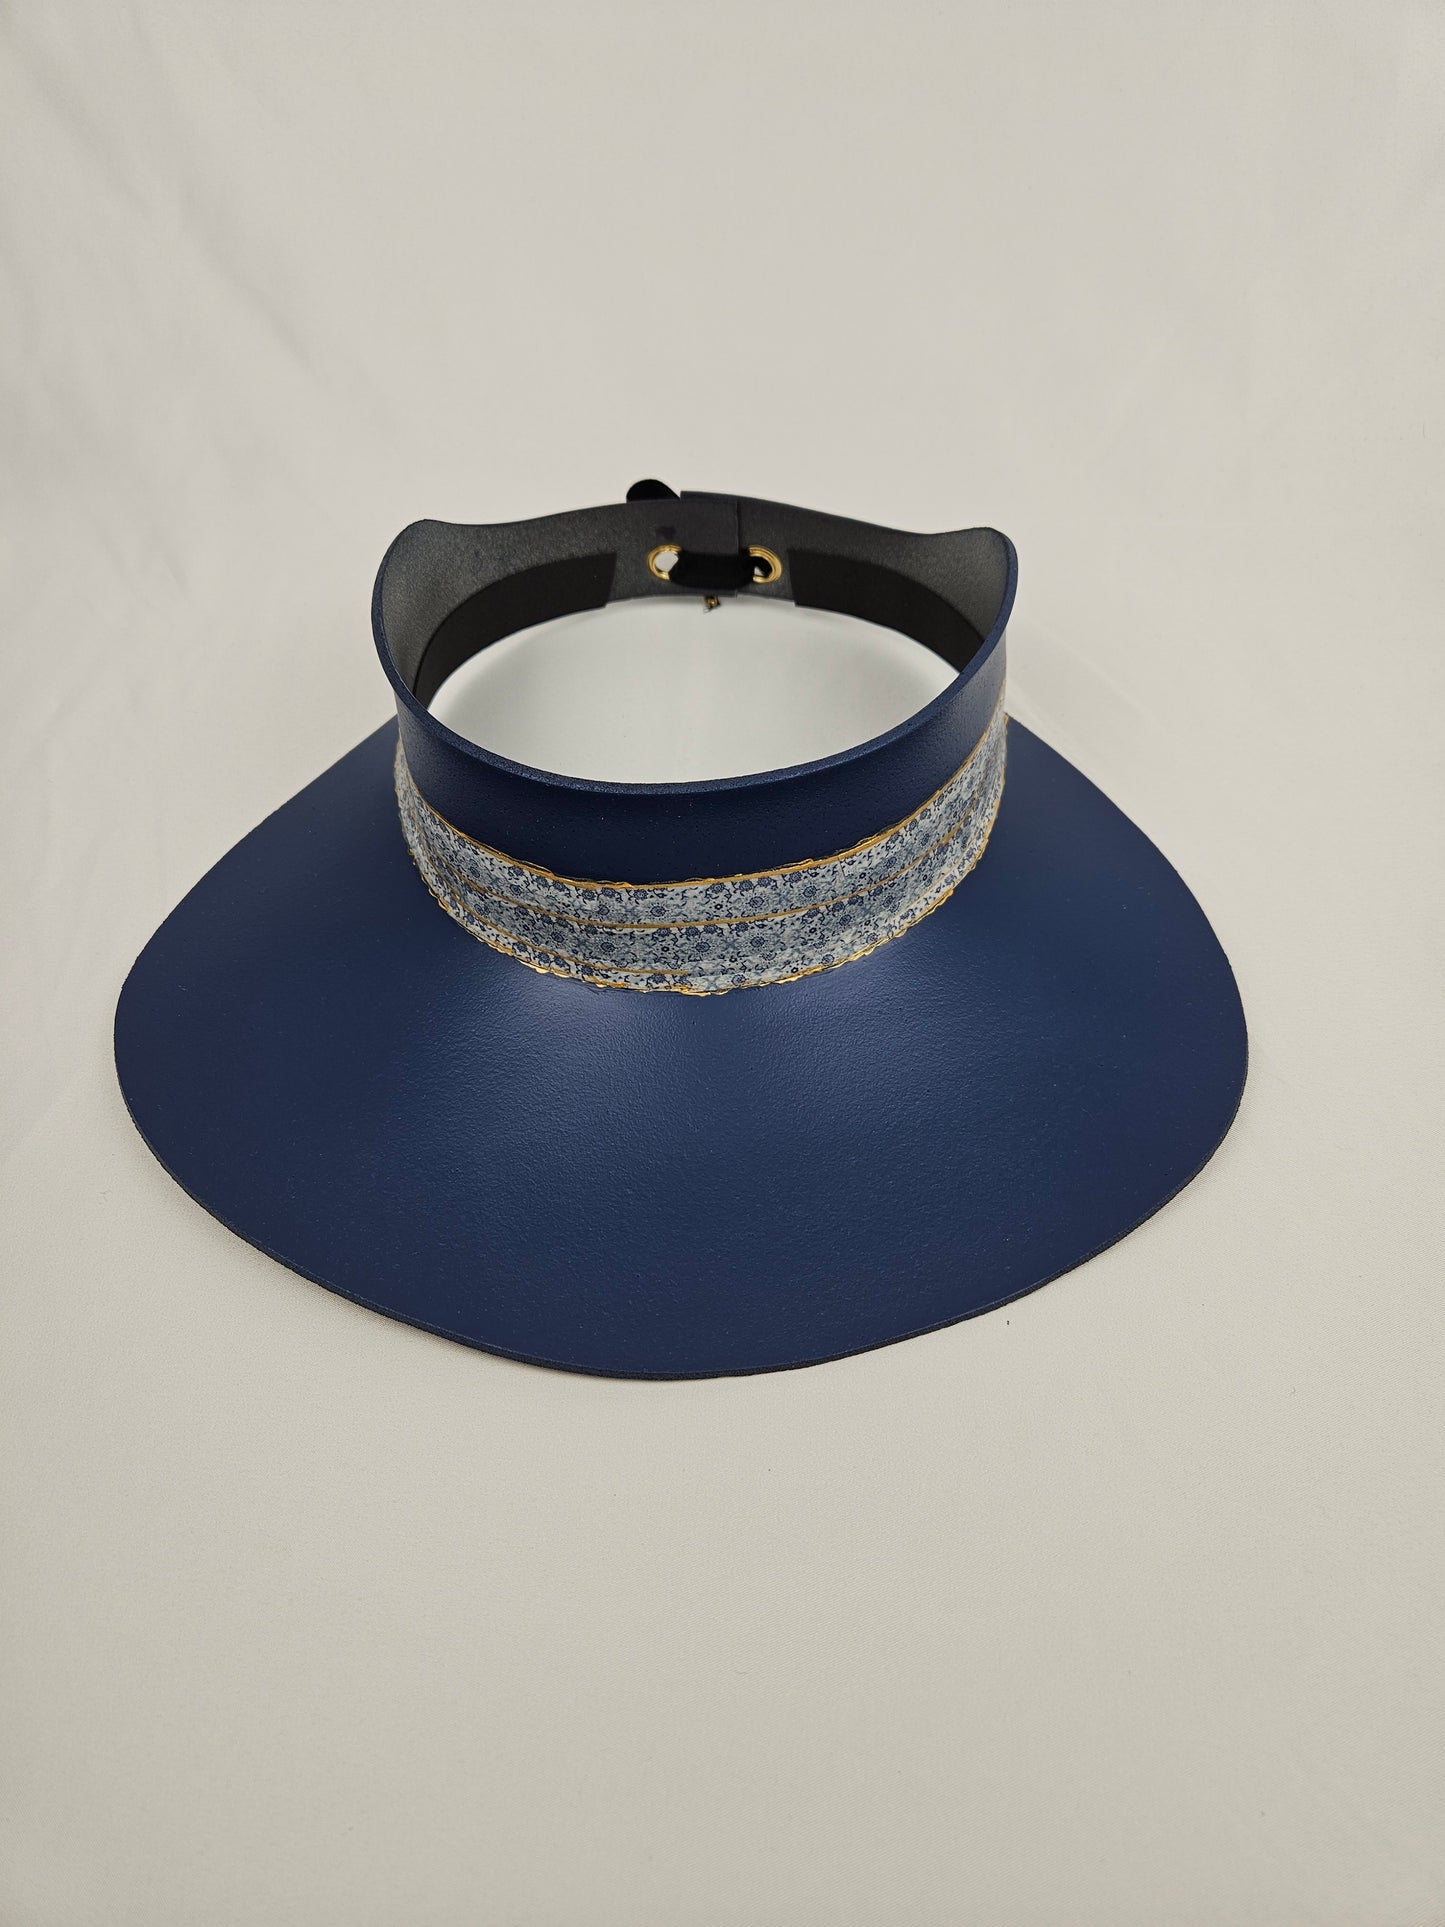 Classic Navy Audrey Foam Sun Visor Hat with Blue and Gold Geometric Band: Big Brim, Golf, Swim, UV Resistant, No Headache